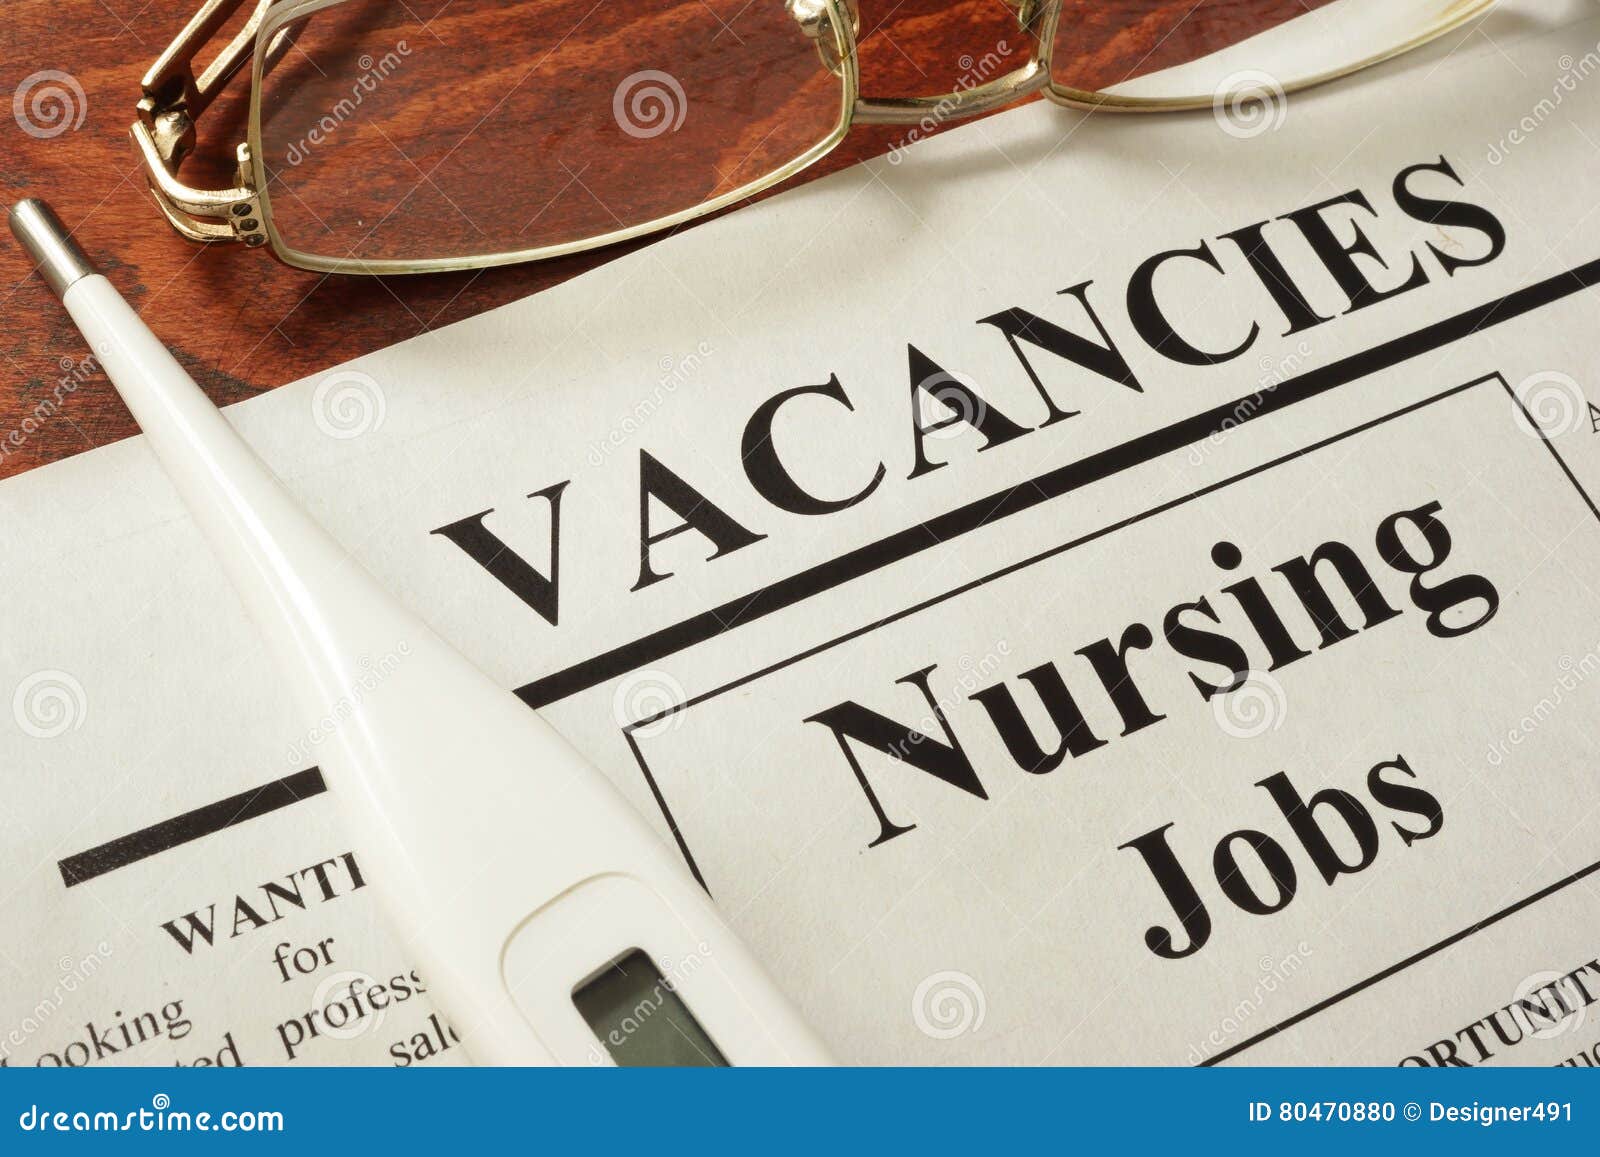 newspaper with ads nursing jobs vacancy.